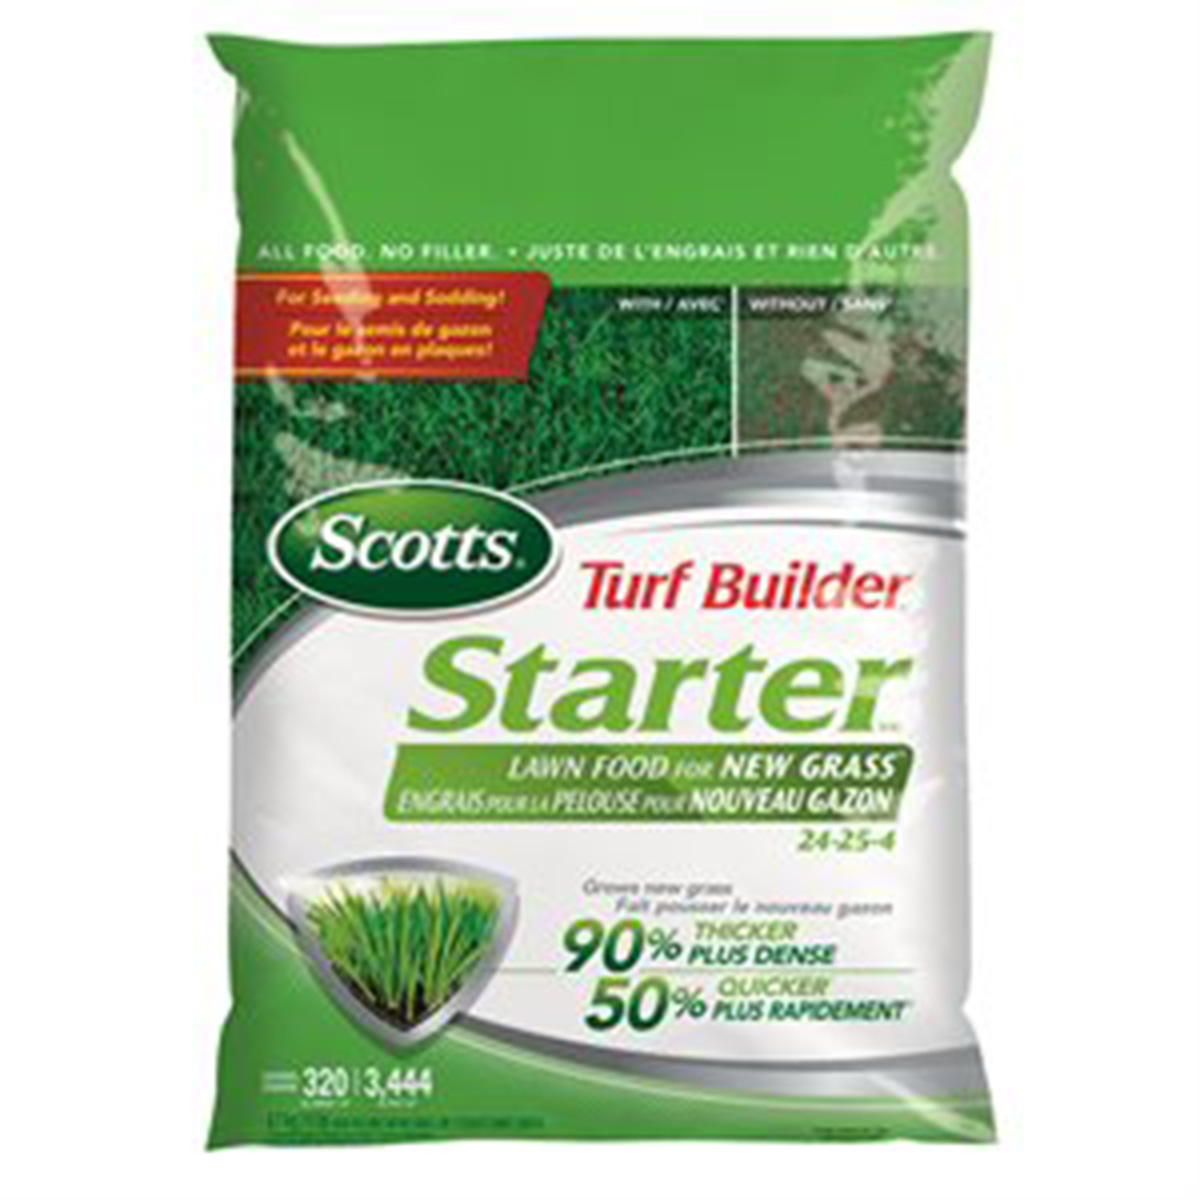 Scotts-Turf_Builder_Starter_Lawn_Food_24-25-4_1200.jpg